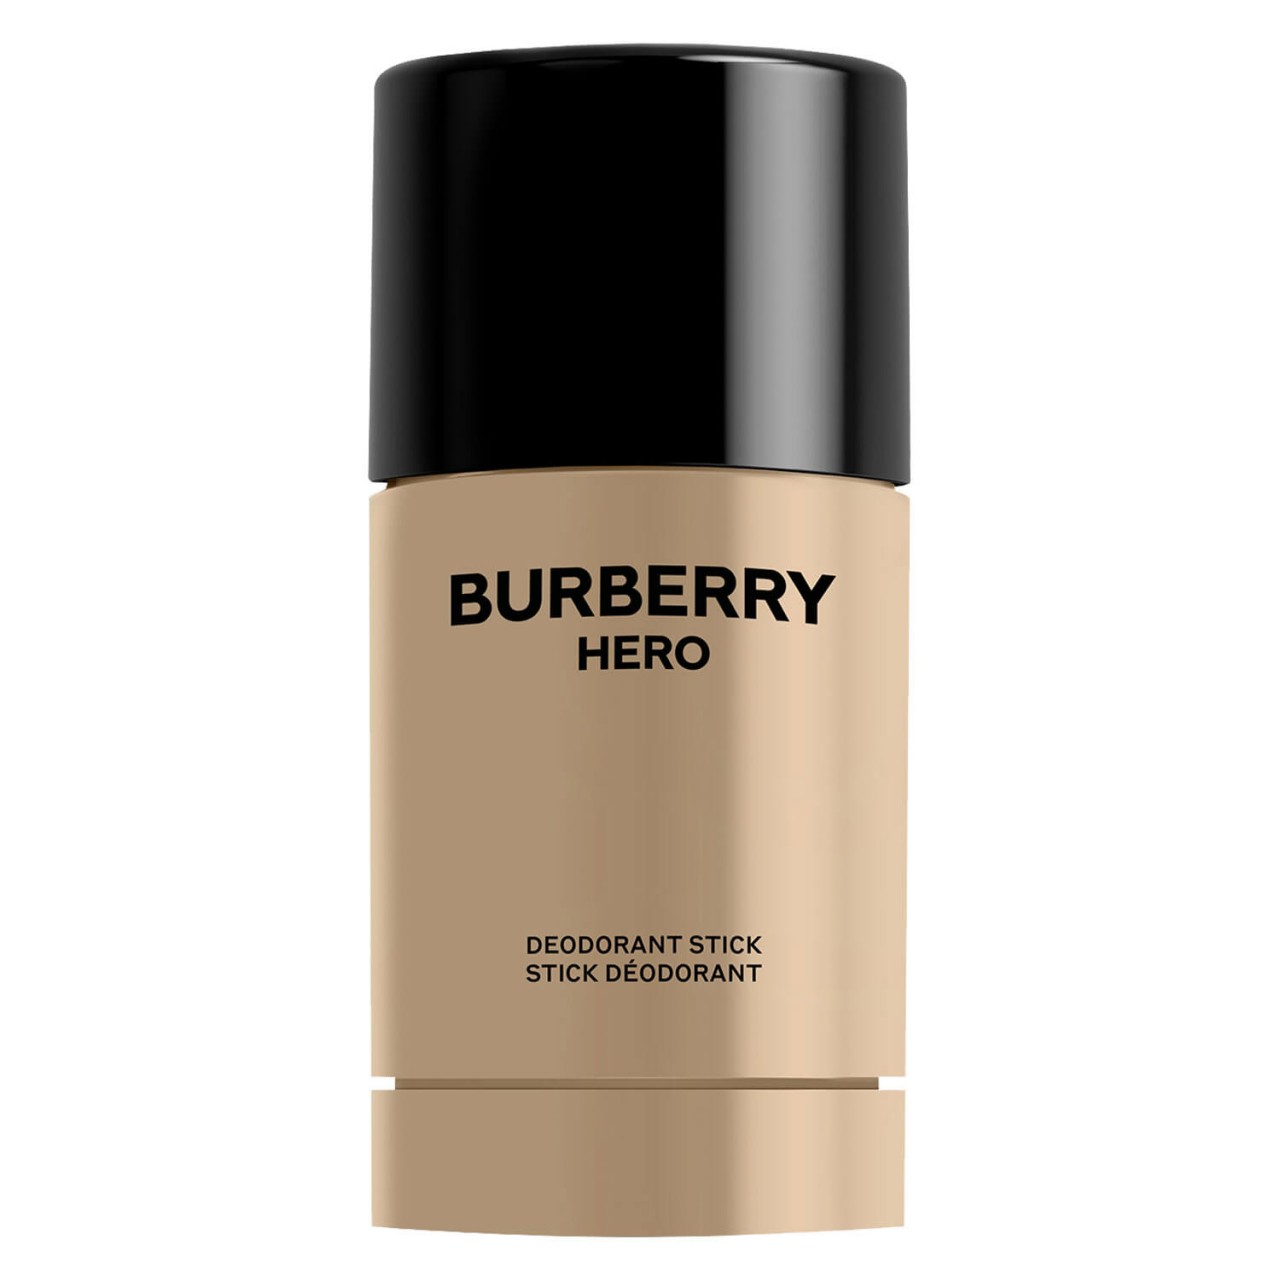 Burberry Hero - Deodorant Stick von Burberry